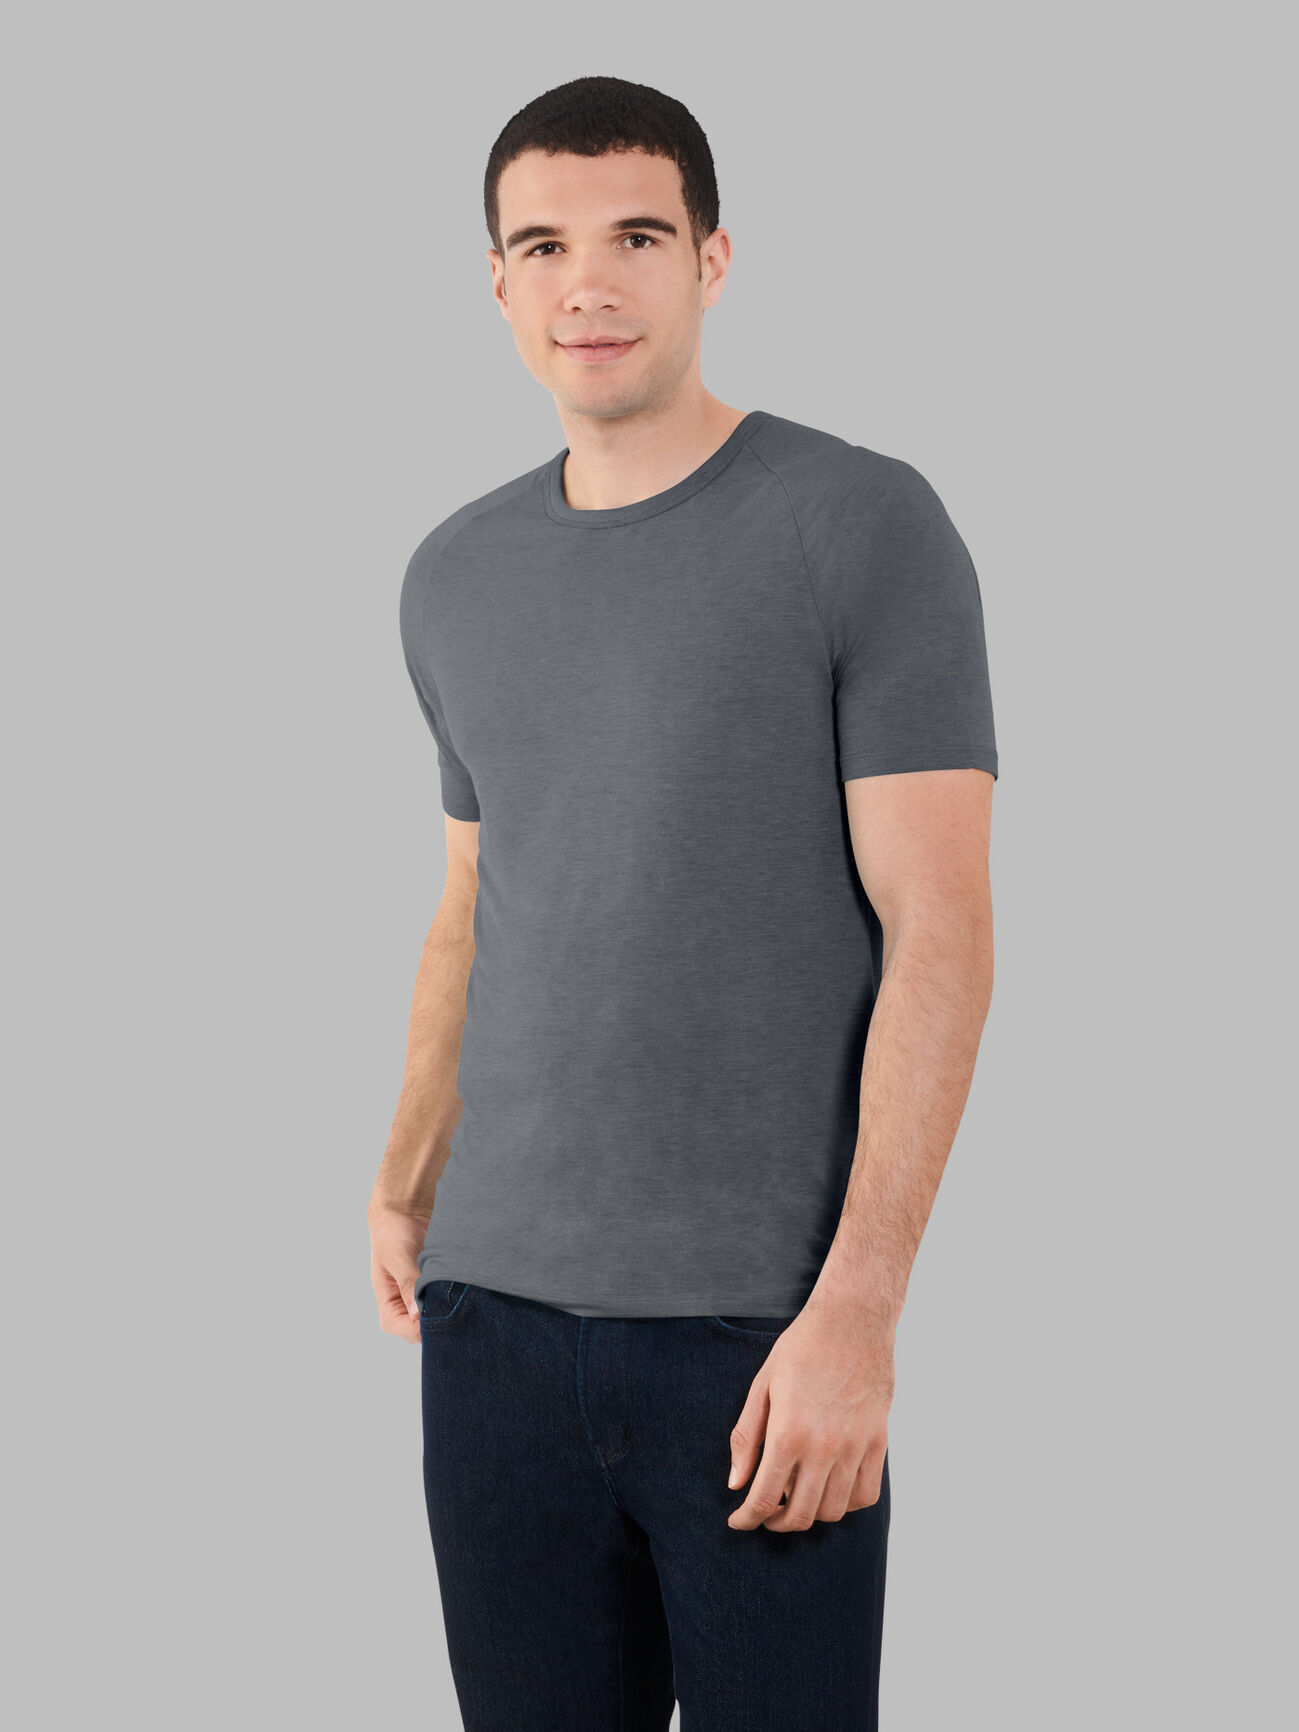 Buy Men's Raglan Long Sleeves T-Shirt & Get 20% Off